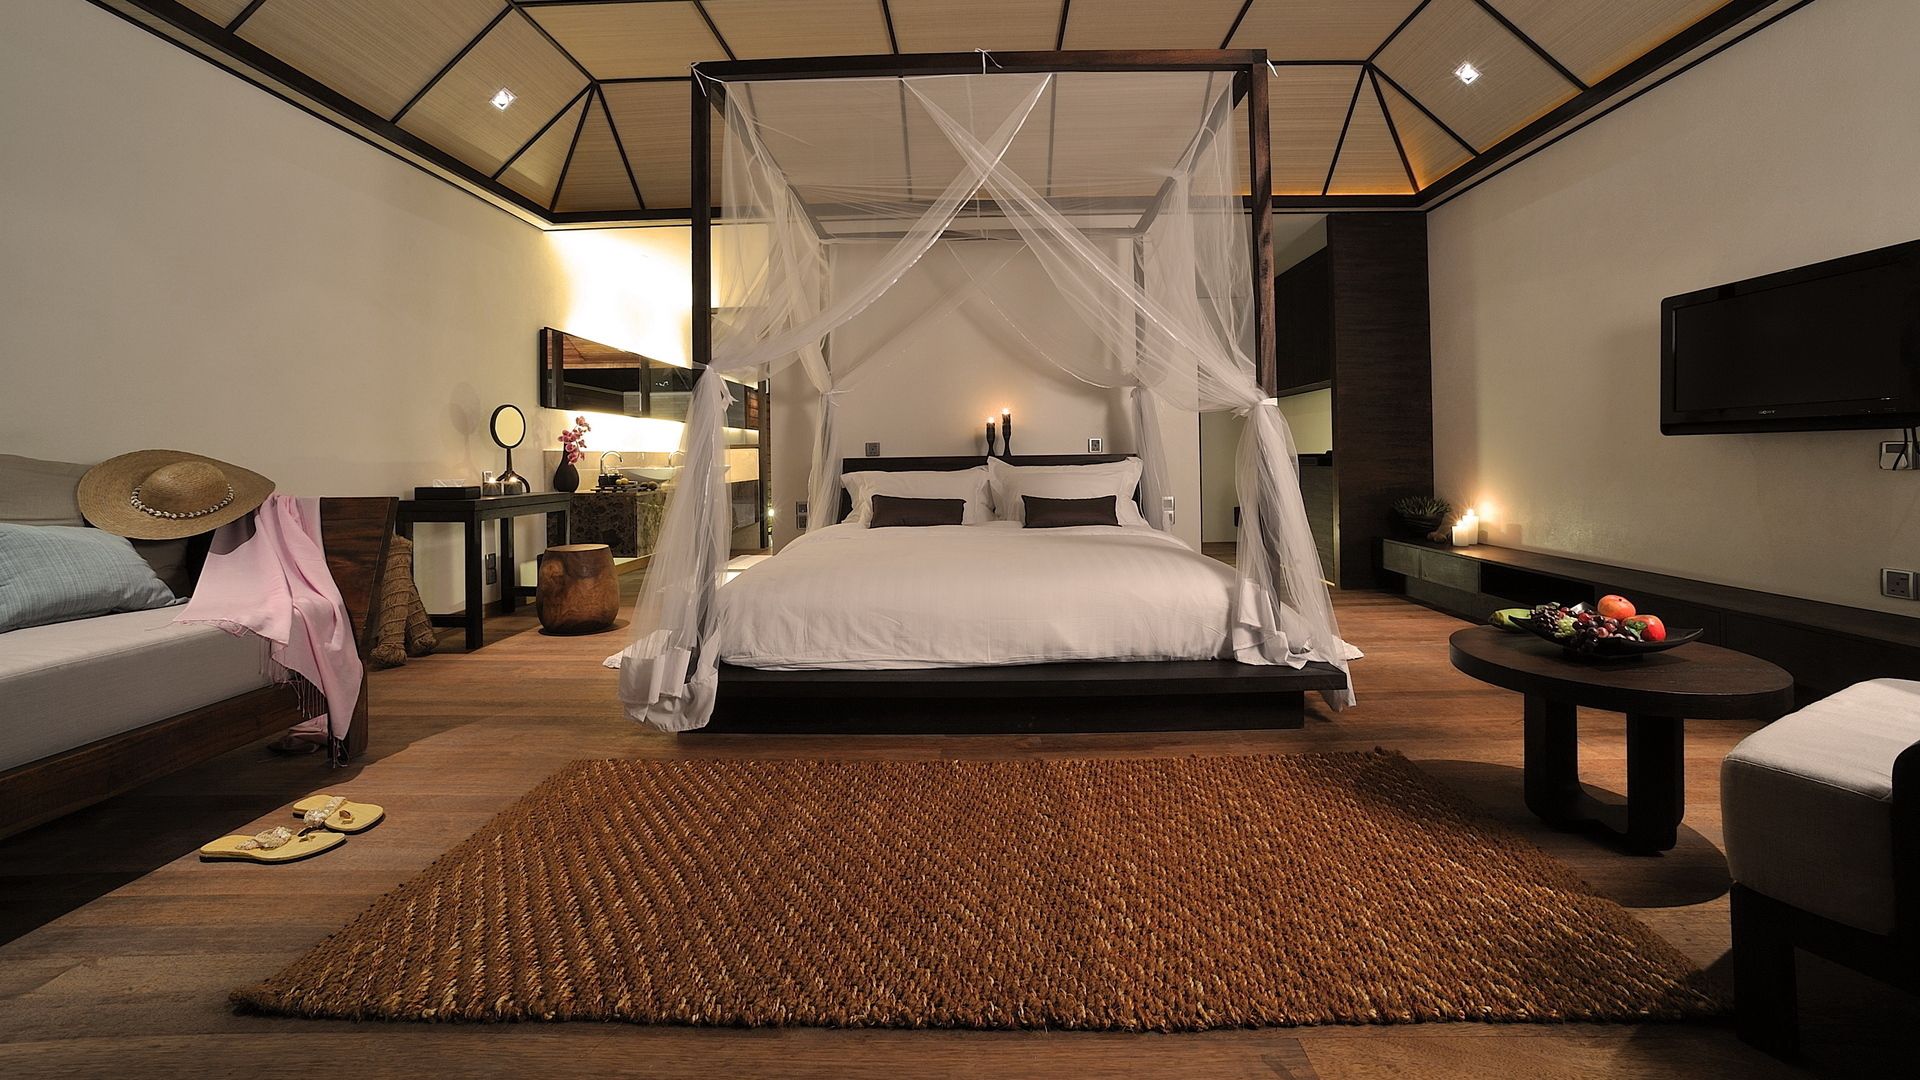 bedroom, fruits, interior, miscellanea, miscellaneous, design, table, room, bed, hat, cushions, pillows, carpet, slates, sleeping 5K